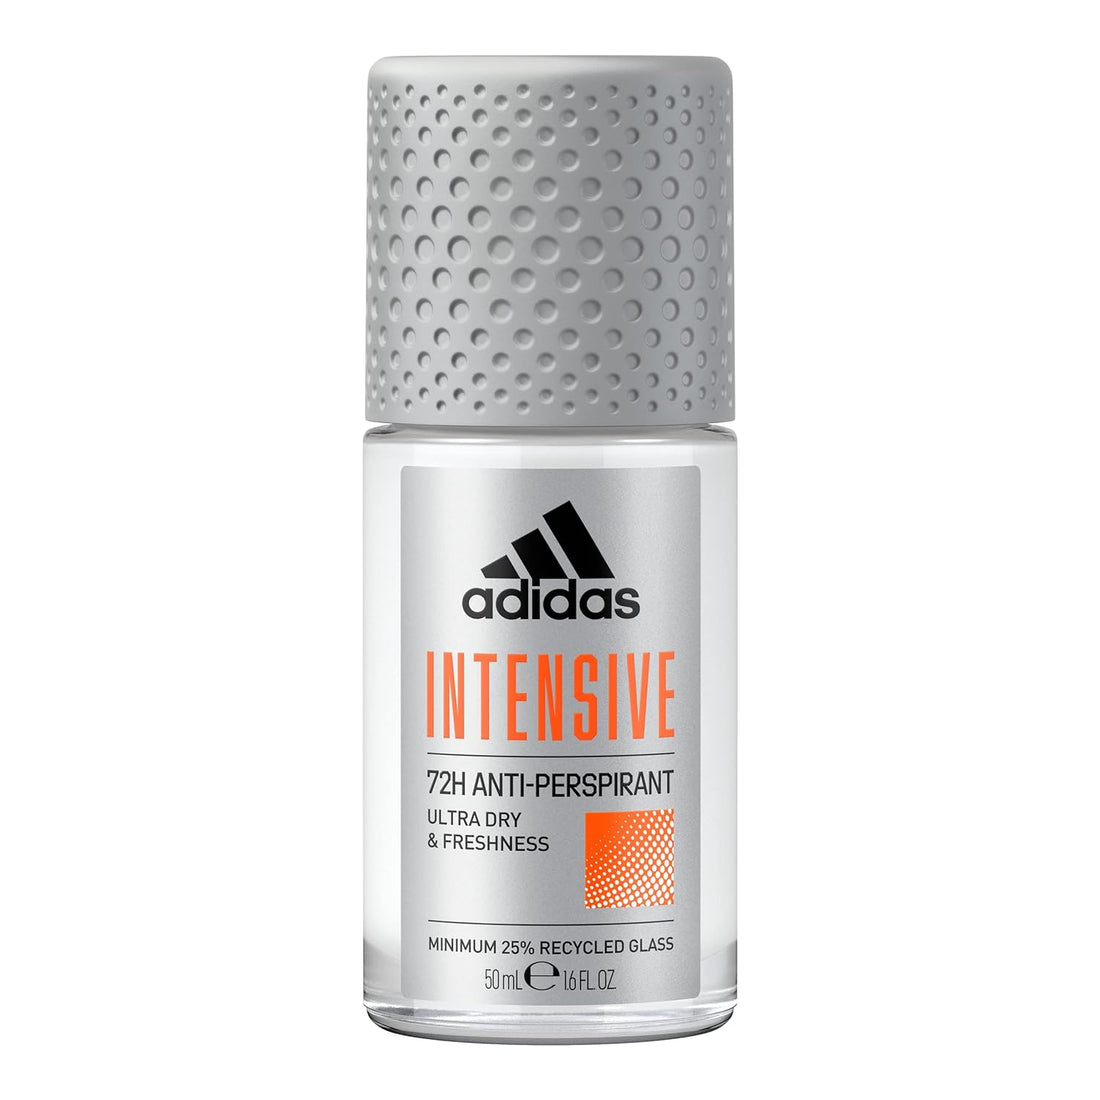 Adidas Intensive 72H Anti-Perspirant Men Roll-On (50ml)